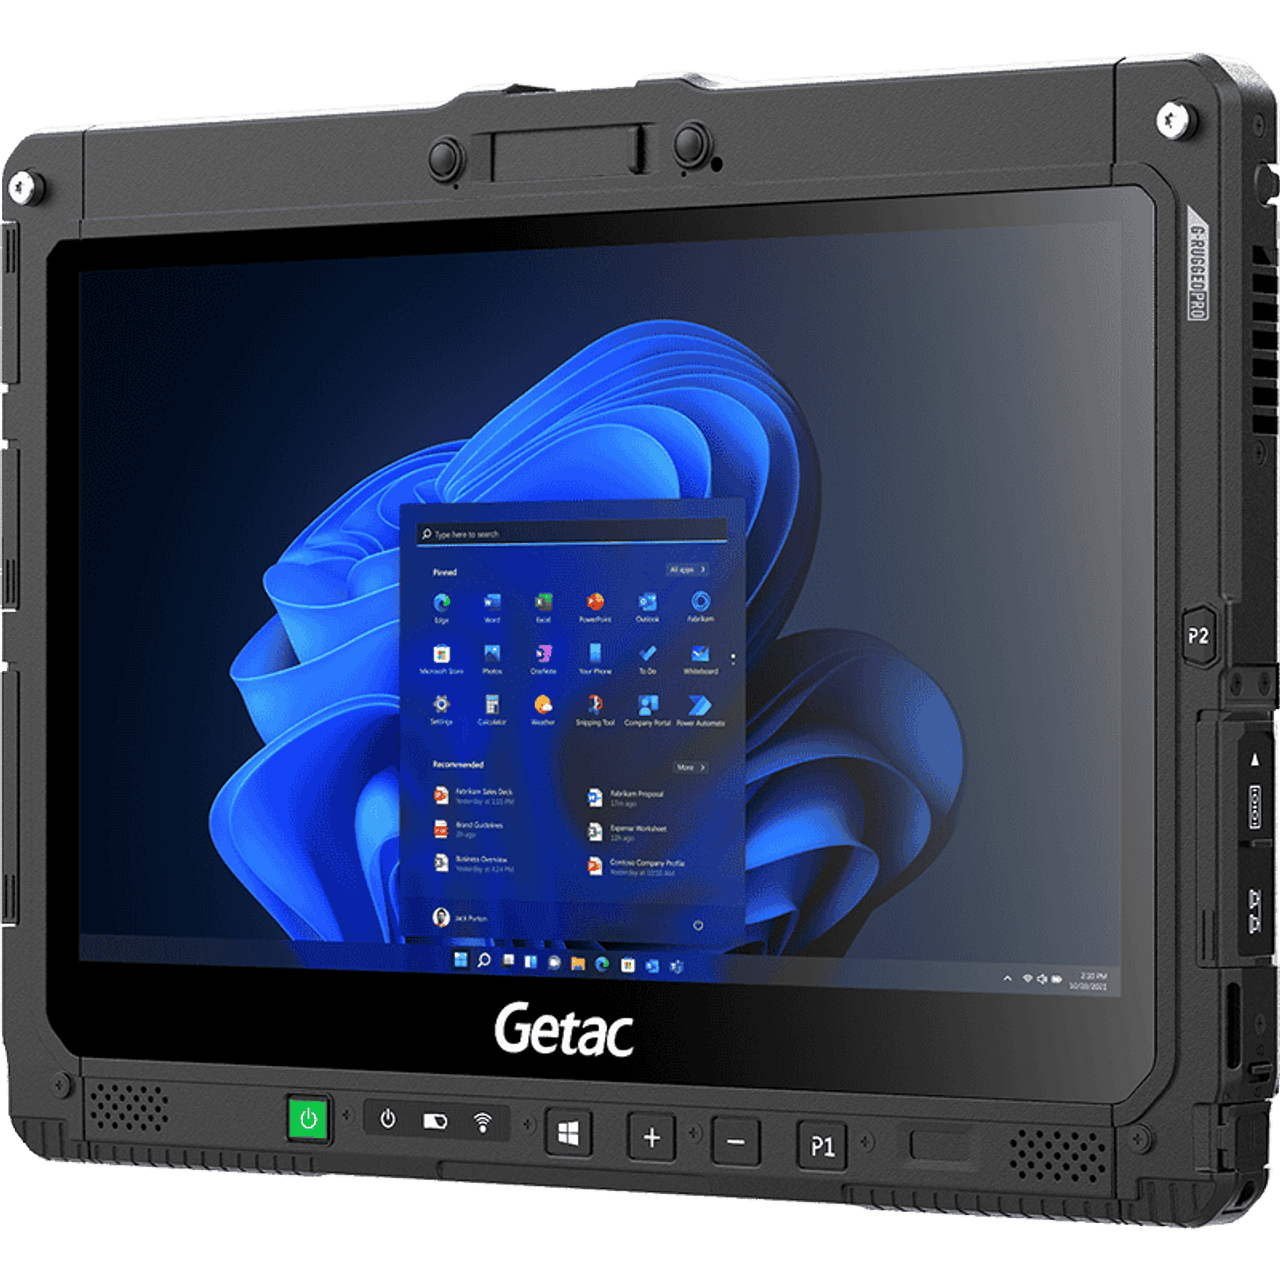 Getac K120 G2 - i7-1165G7, W/Windows Hello Webcam, W 10 Pro x64 with 16GB RAM, 256GB PCIe SSD, SR HD LCD + Touchscreen + Rear Camera + Hard Tip stylus, US PC, (w/o Keyboard Dock), Wifi+BT+Passthrough, 3 Years B2B Warranty